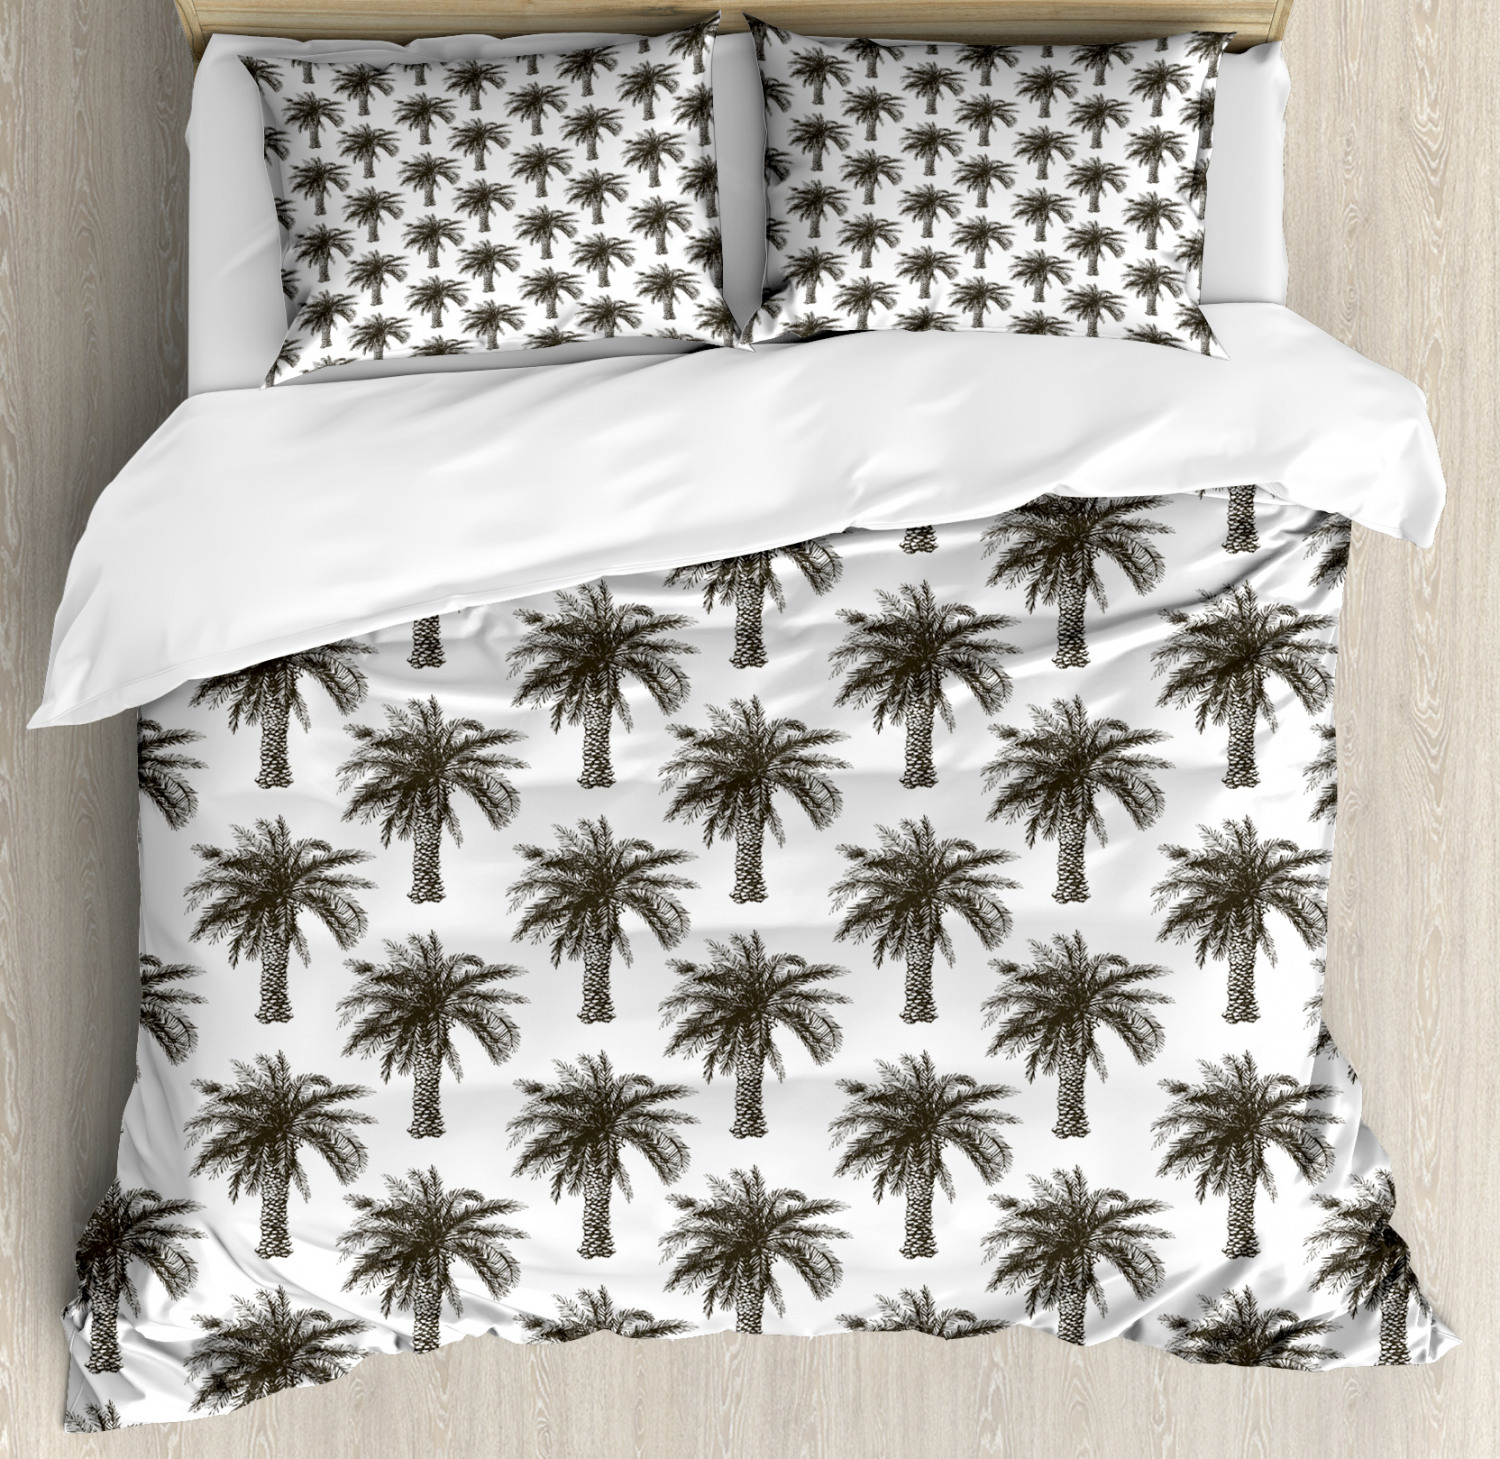 Palm Tree Duvet Cover Set With Pillow Shams Retro Growth Lush